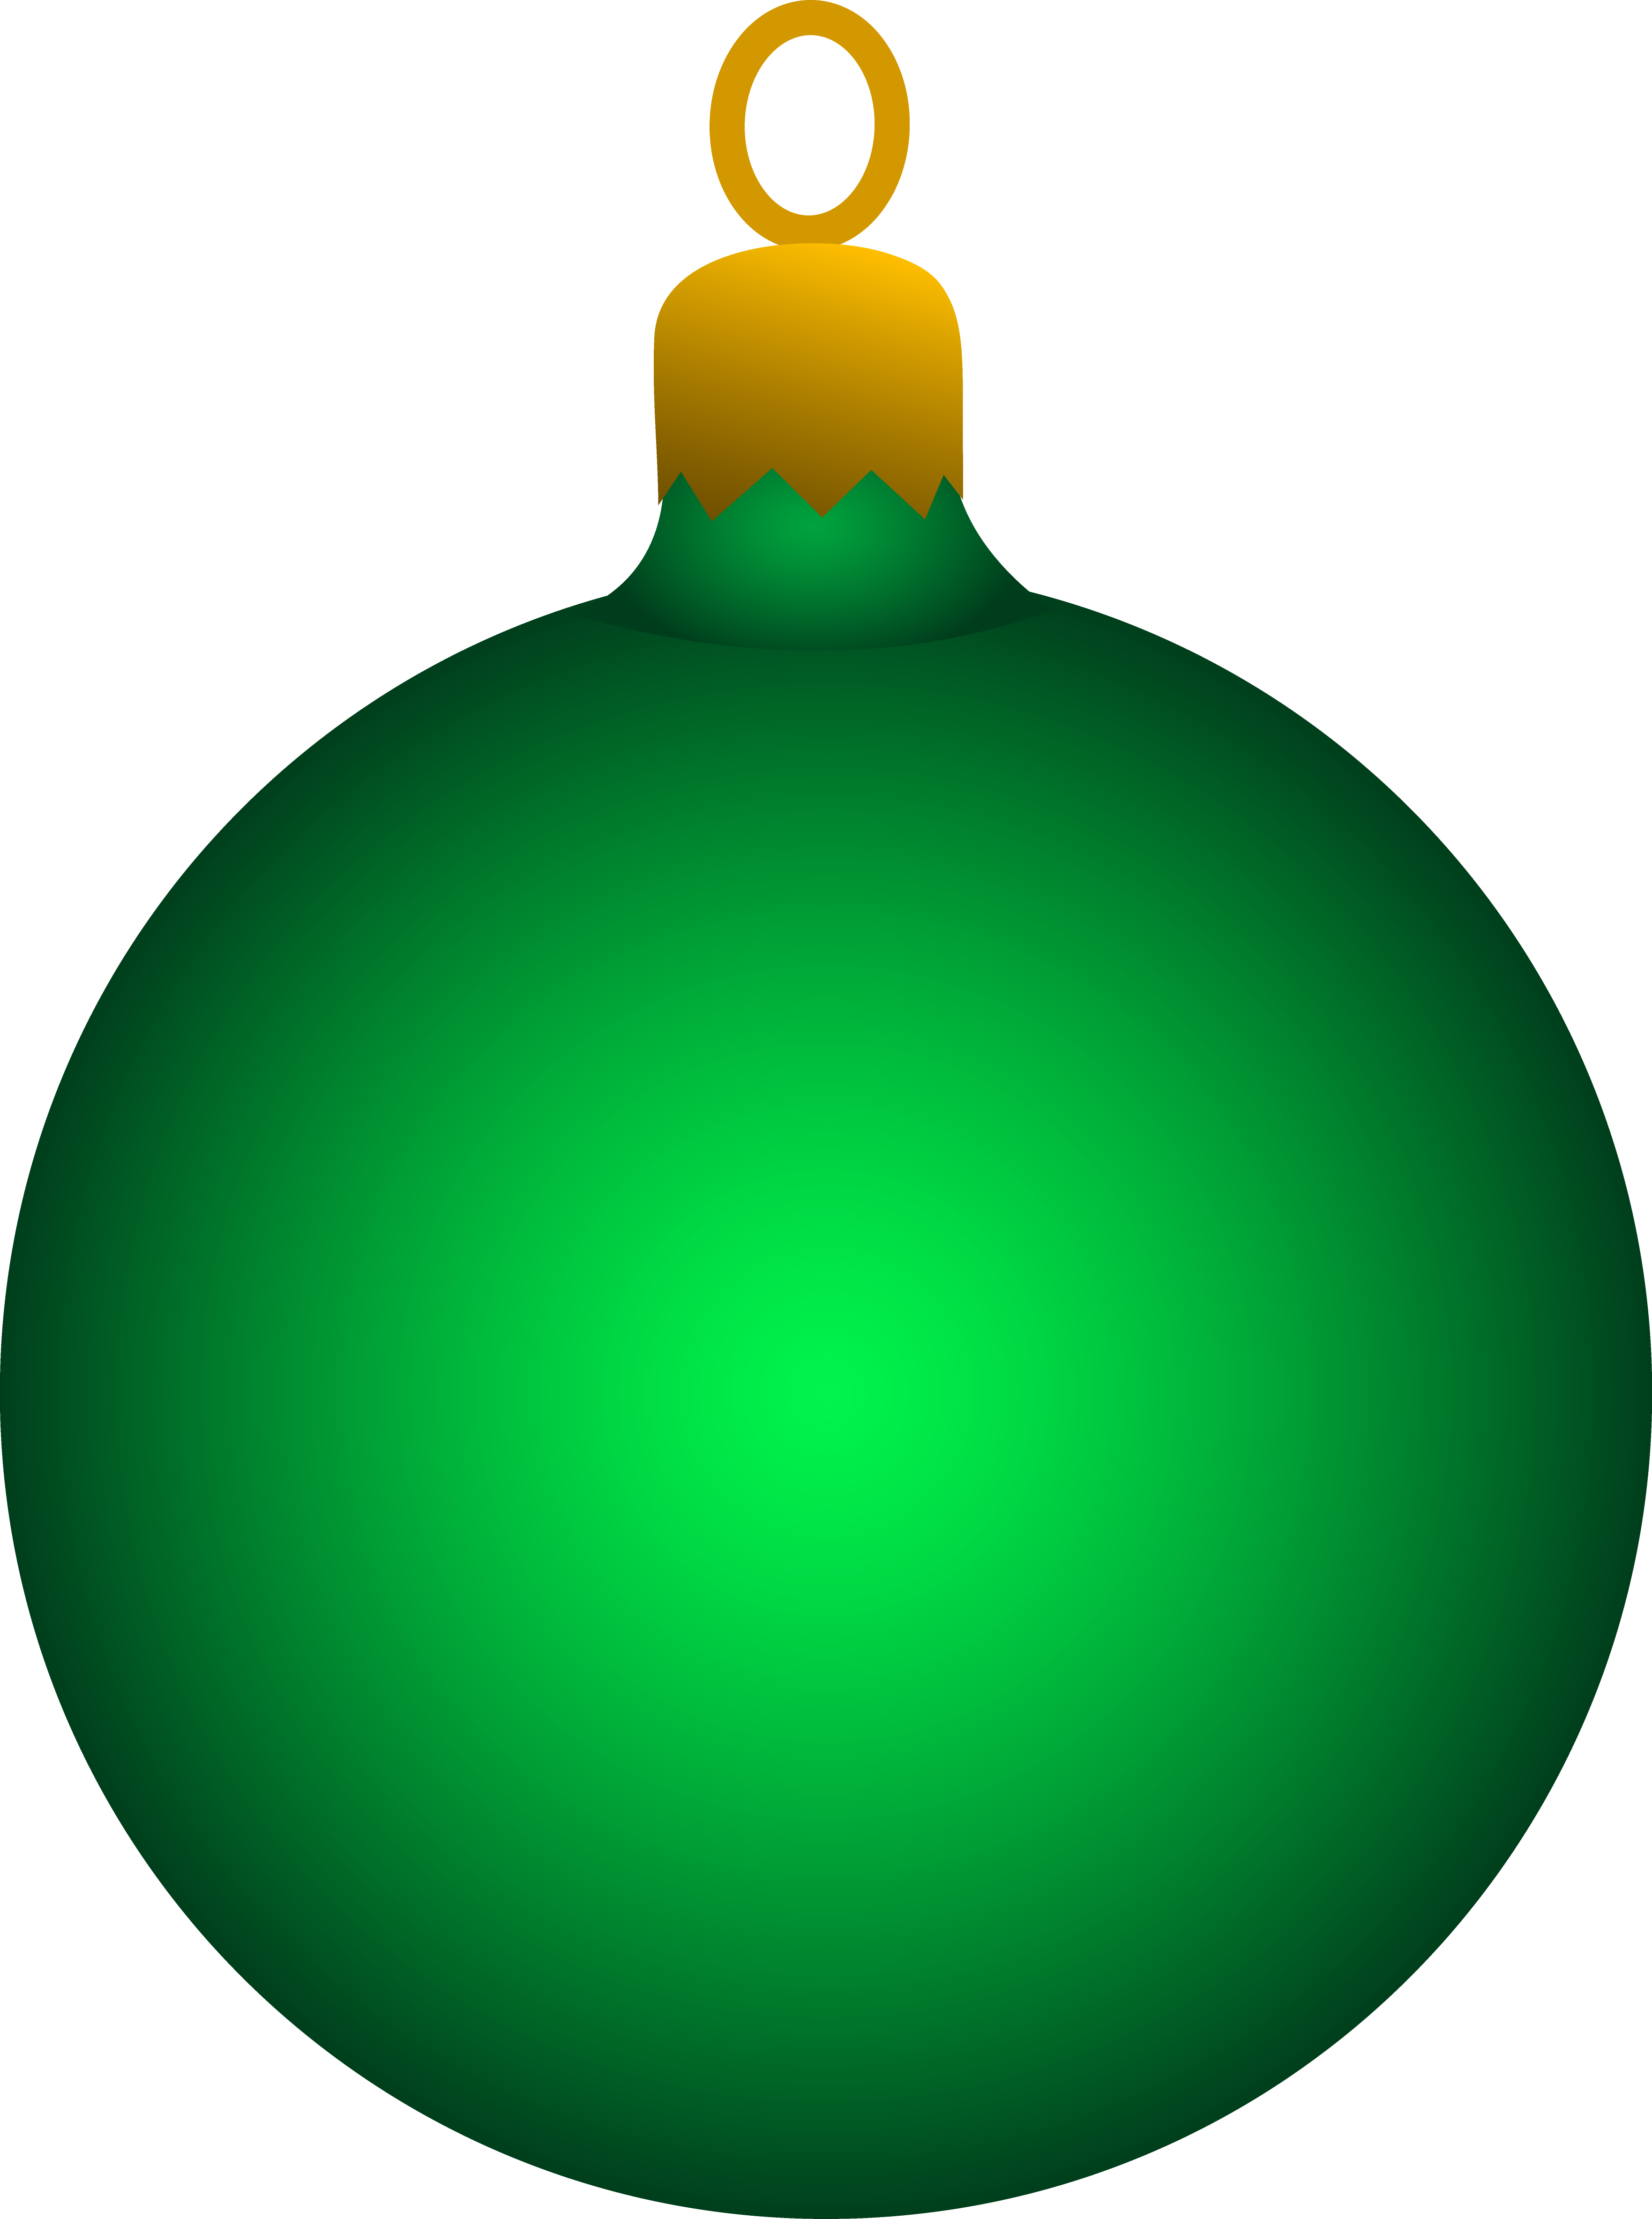 Christmas balls decorations clipart - ClipartFox